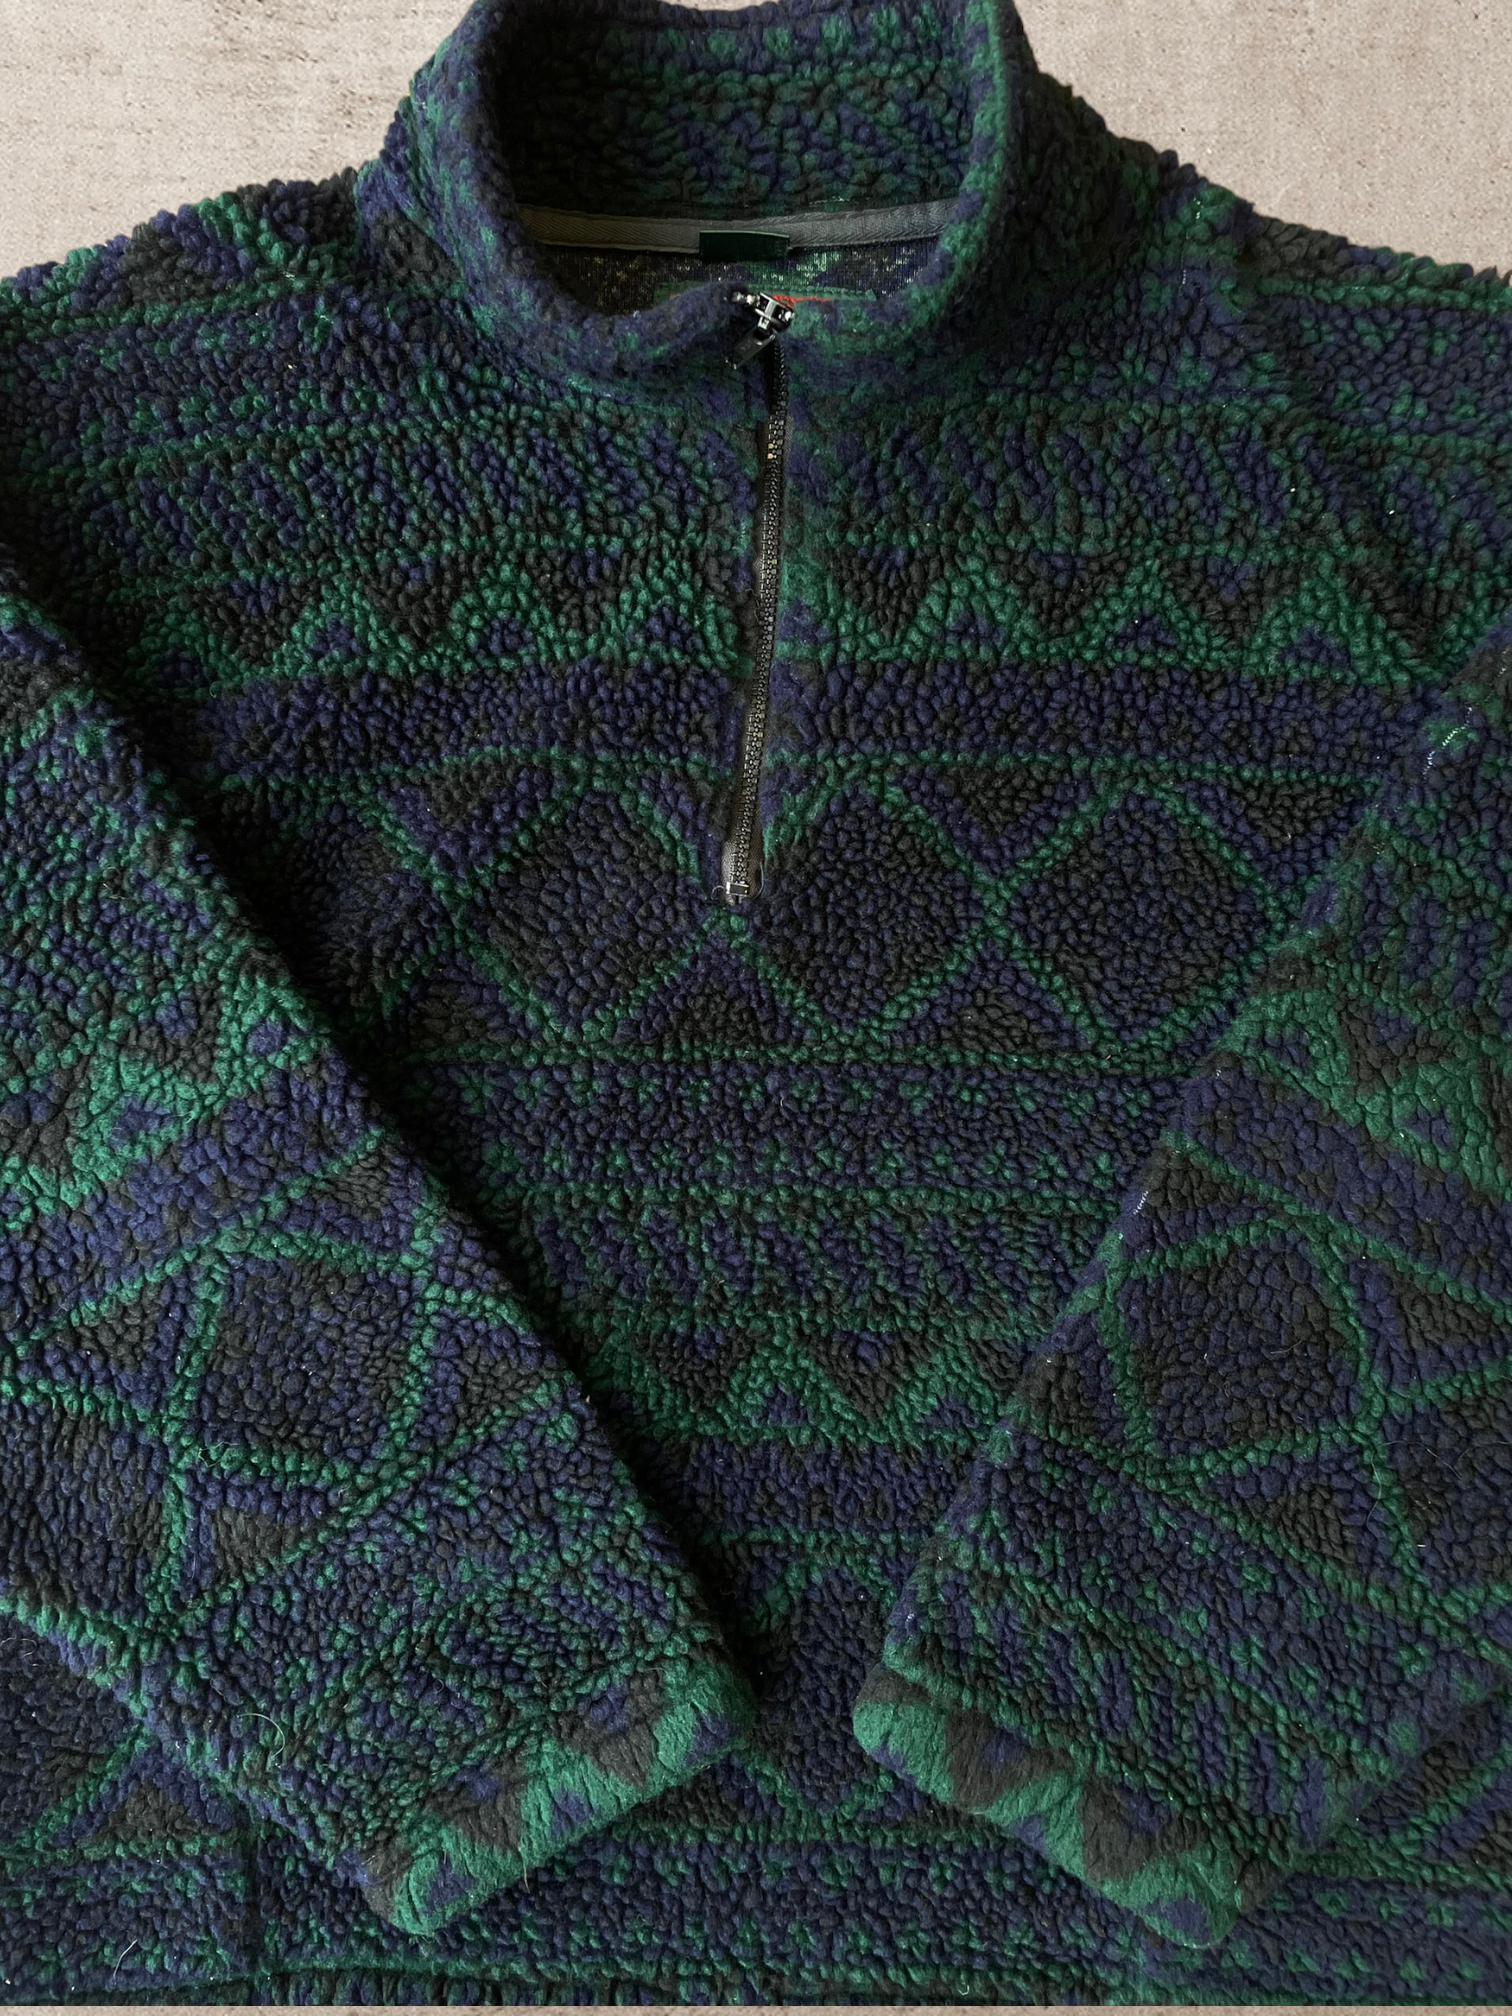 90s Patterned 3/4 Zip up Fleece - X-Large